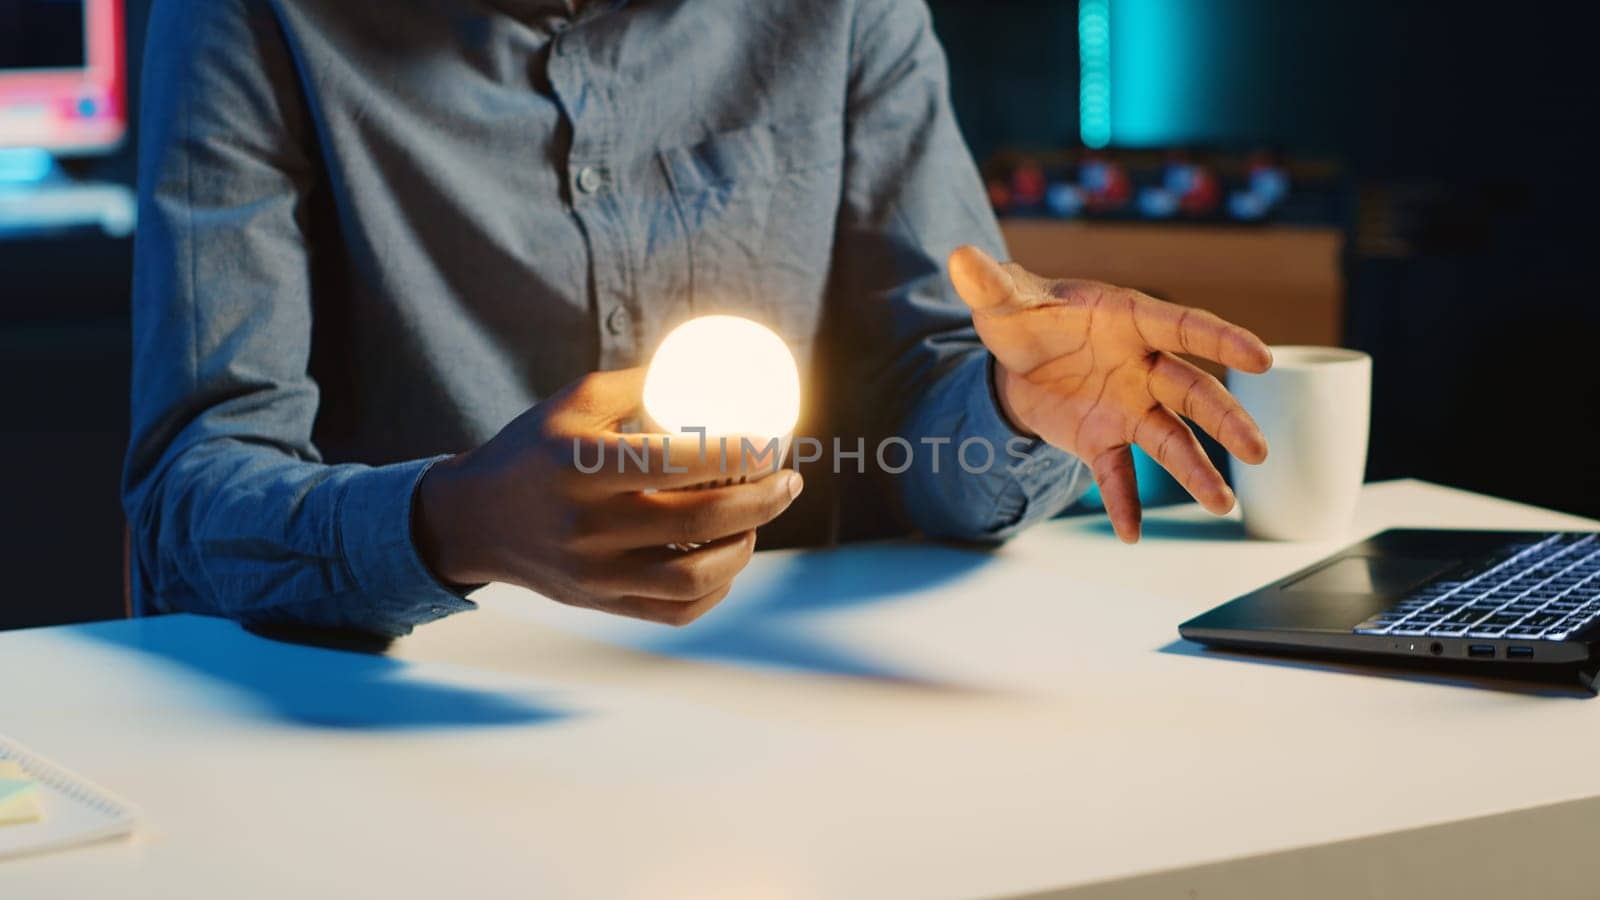 Media star reviews light bulb in studio by DCStudio